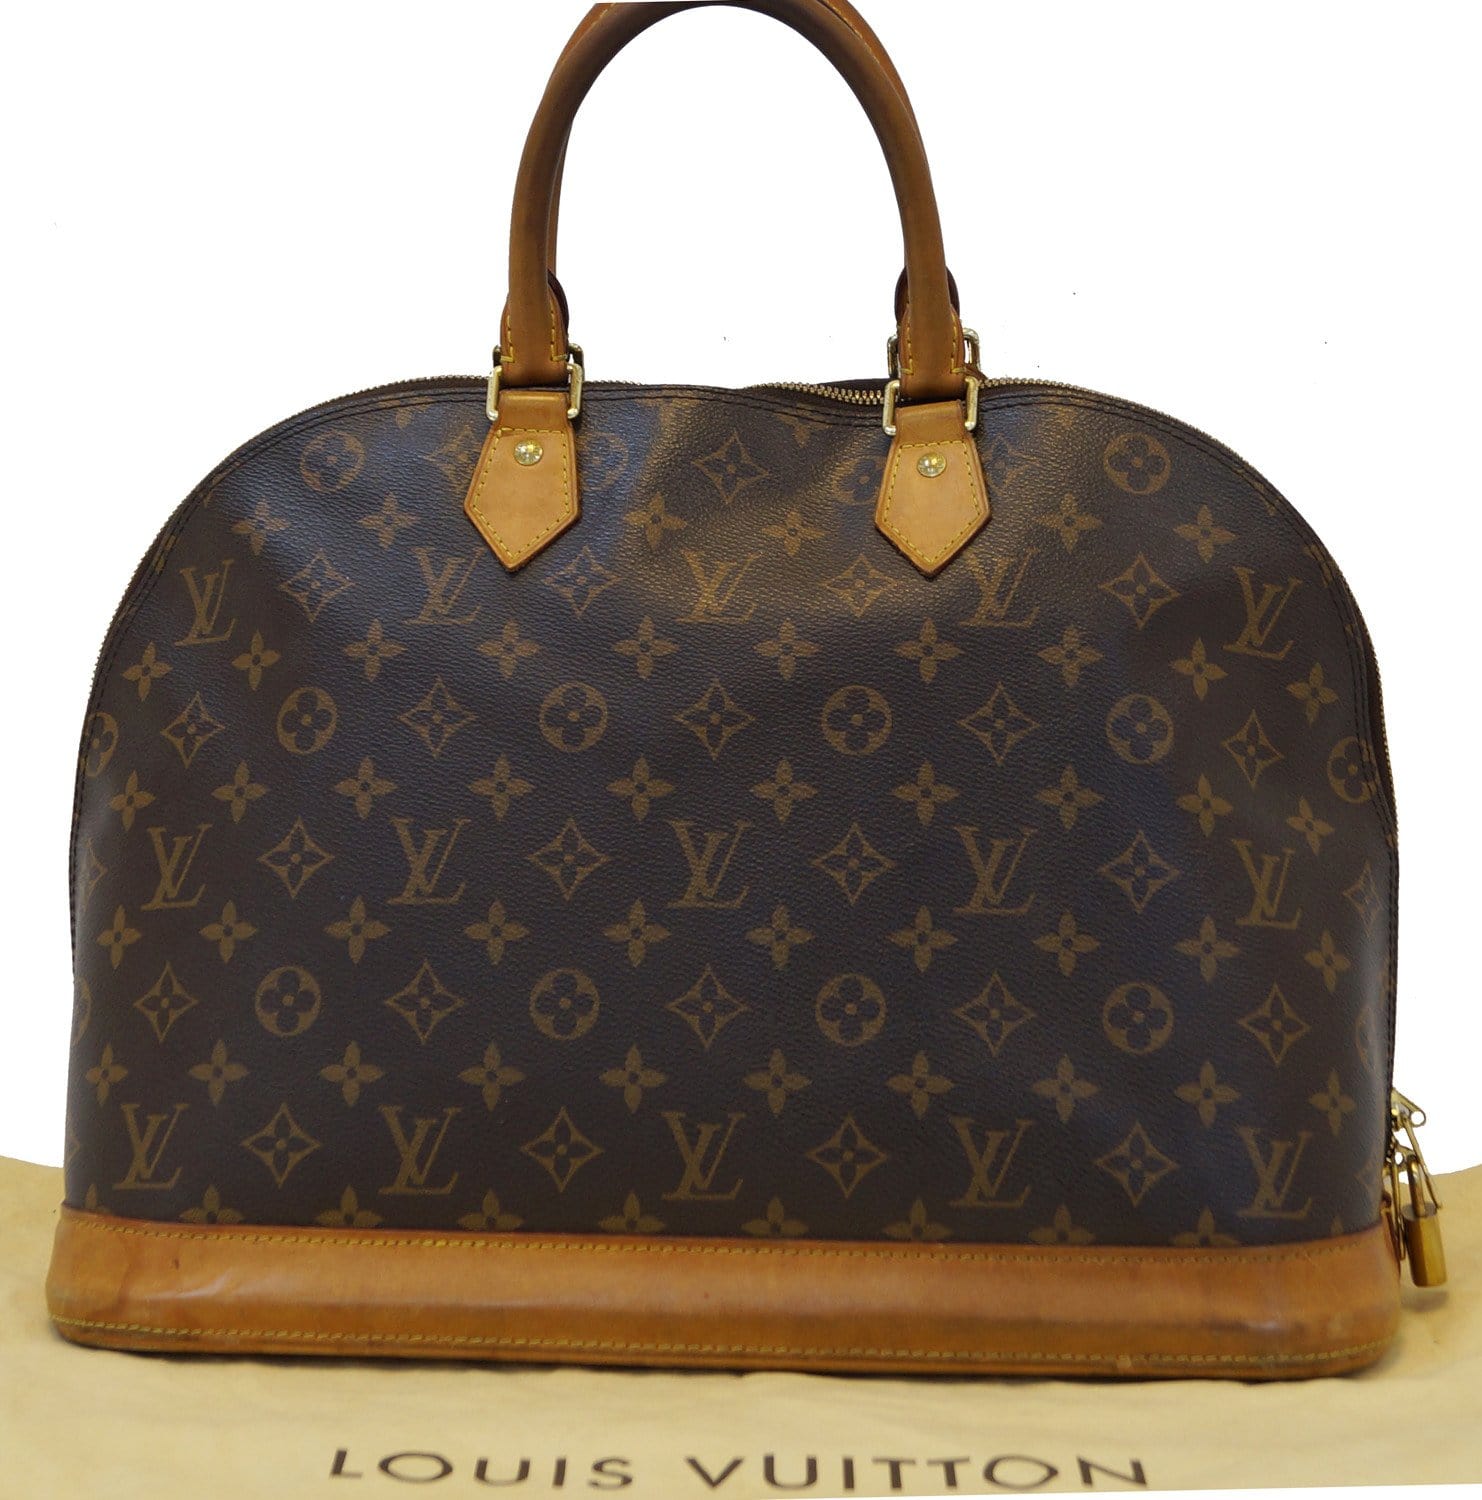 Louis Vuitton monogram alma gm bag